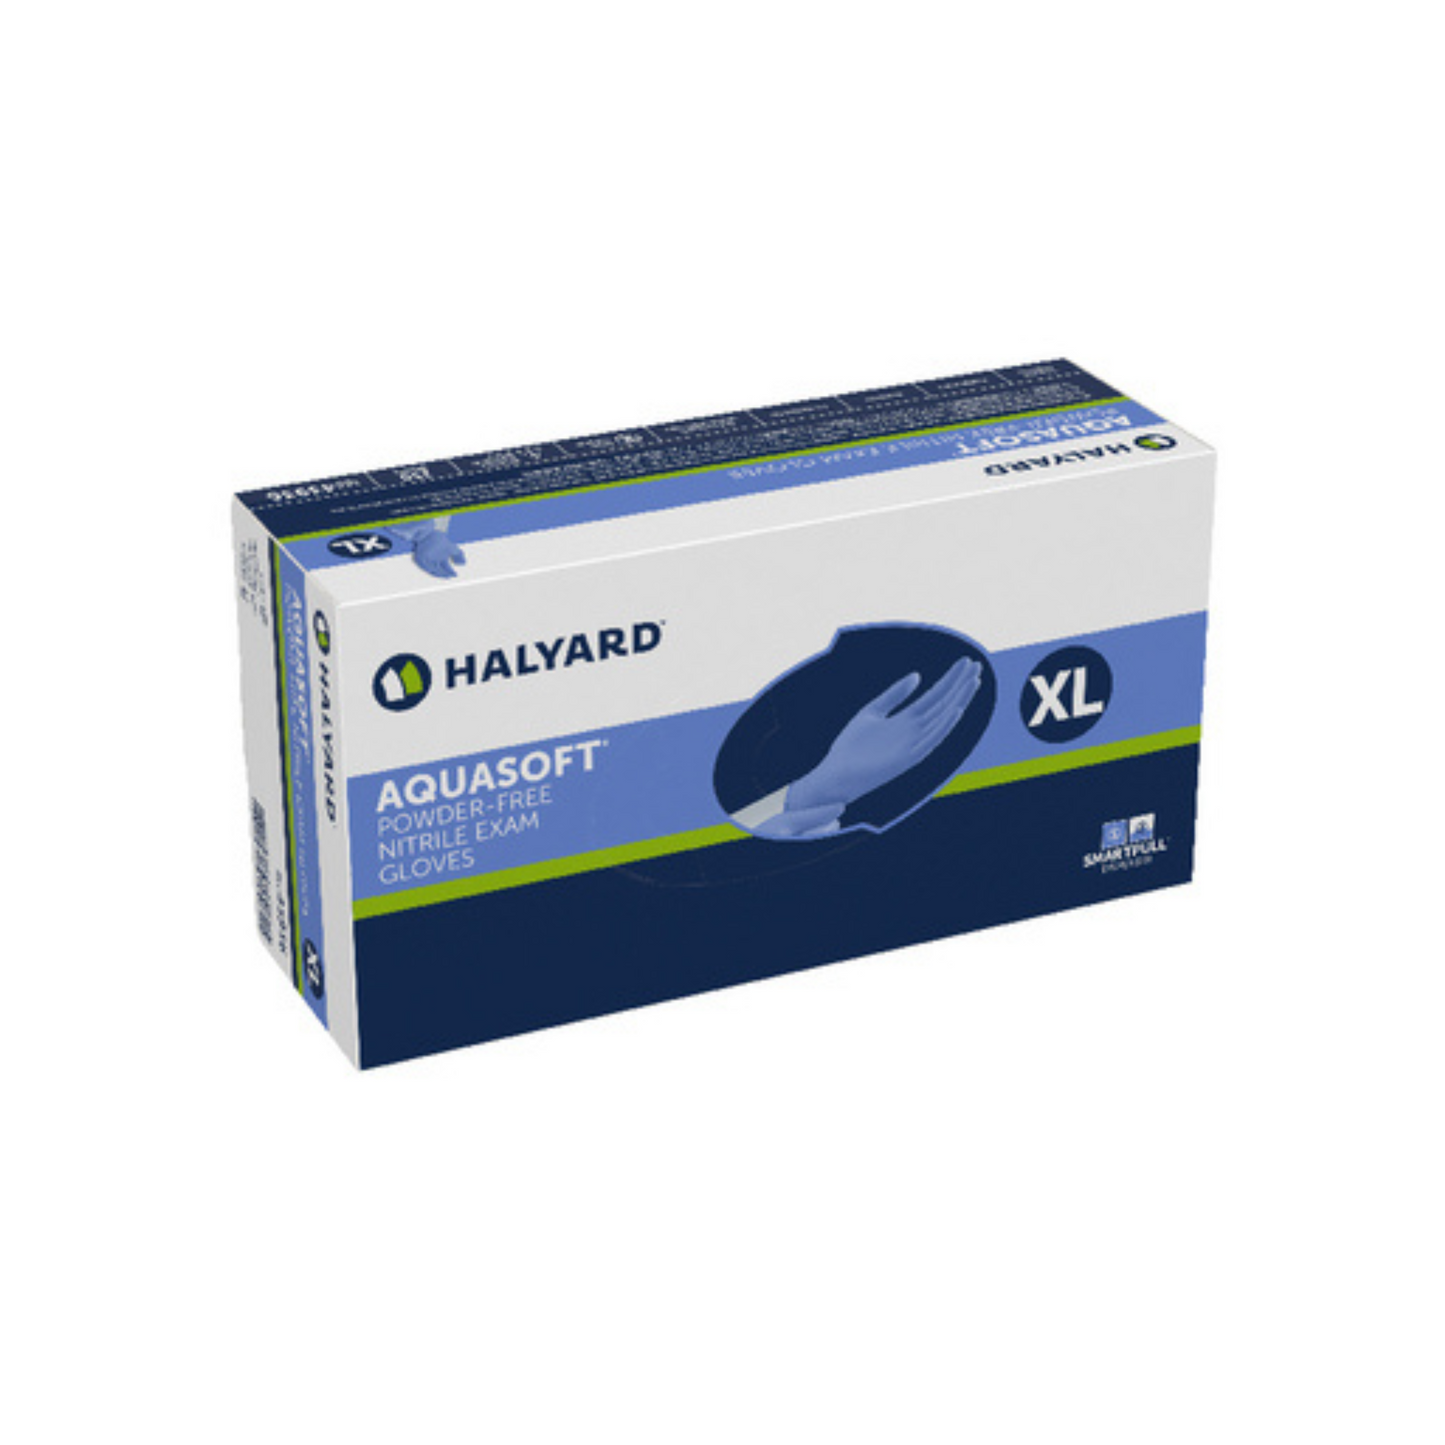 Halyard Aquasoft Nitrile Exam Gloves XL - Carton (2500pc)